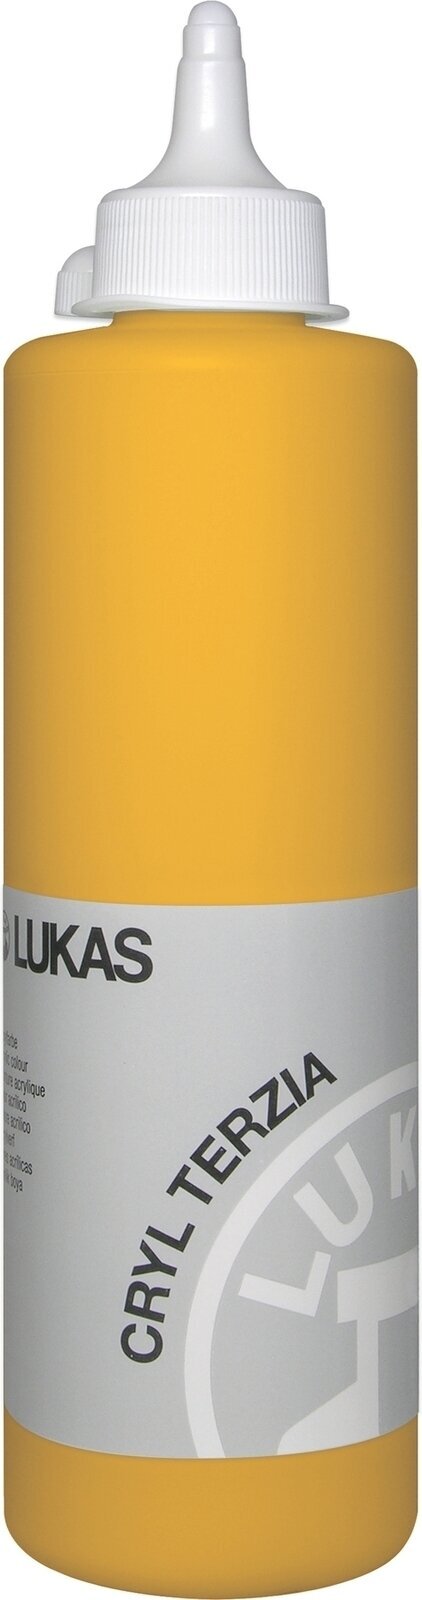 Acrylic Paint Lukas Cryl Terzia Acrylic Paint Plastic Bottle Acrylic Paint Indian Yellow 500 ml 1 pc